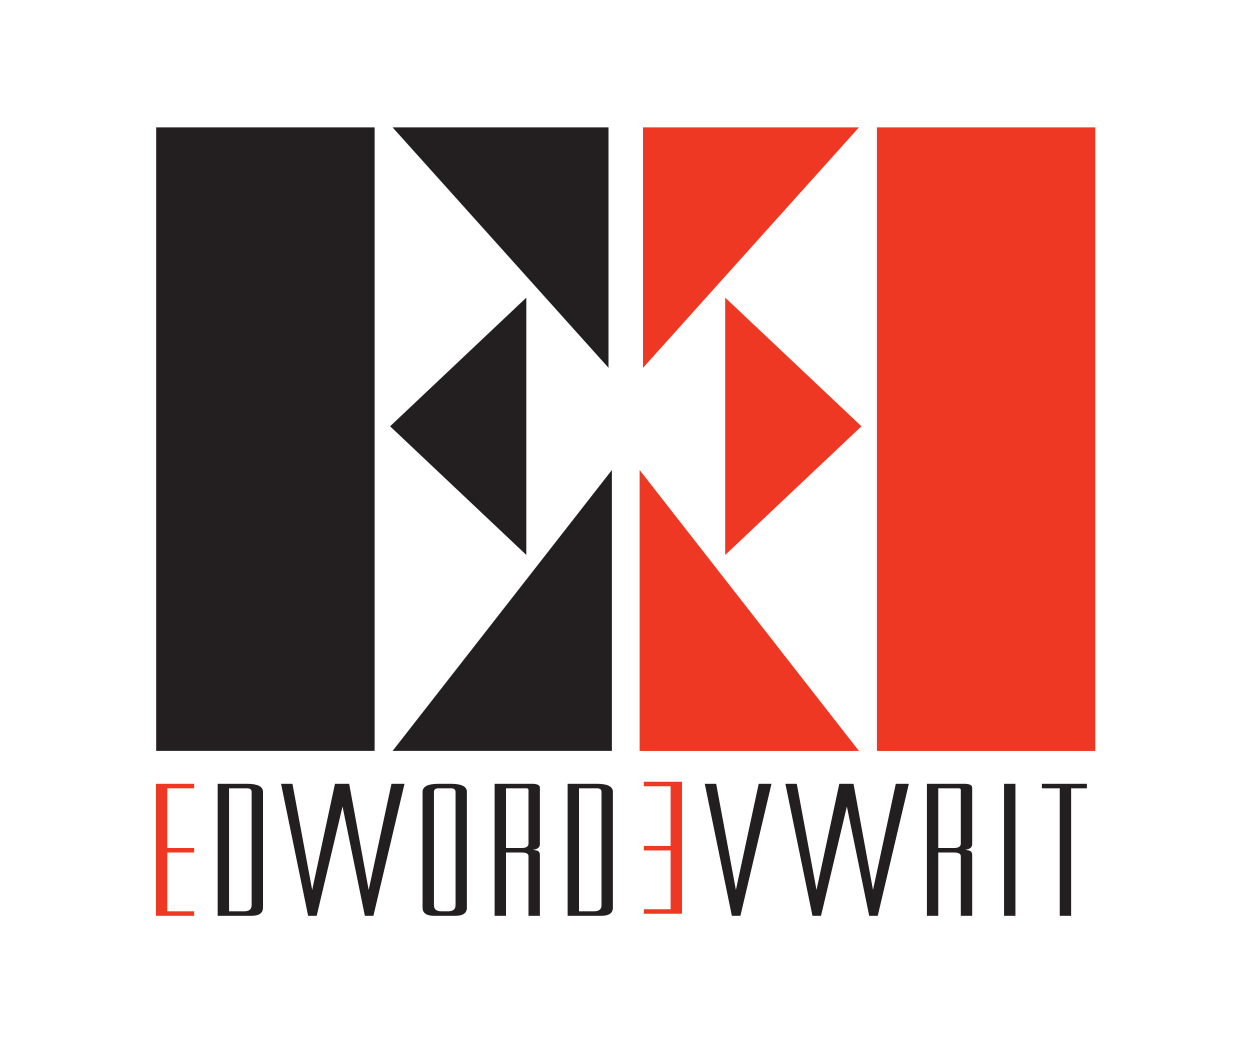 edword evwrit